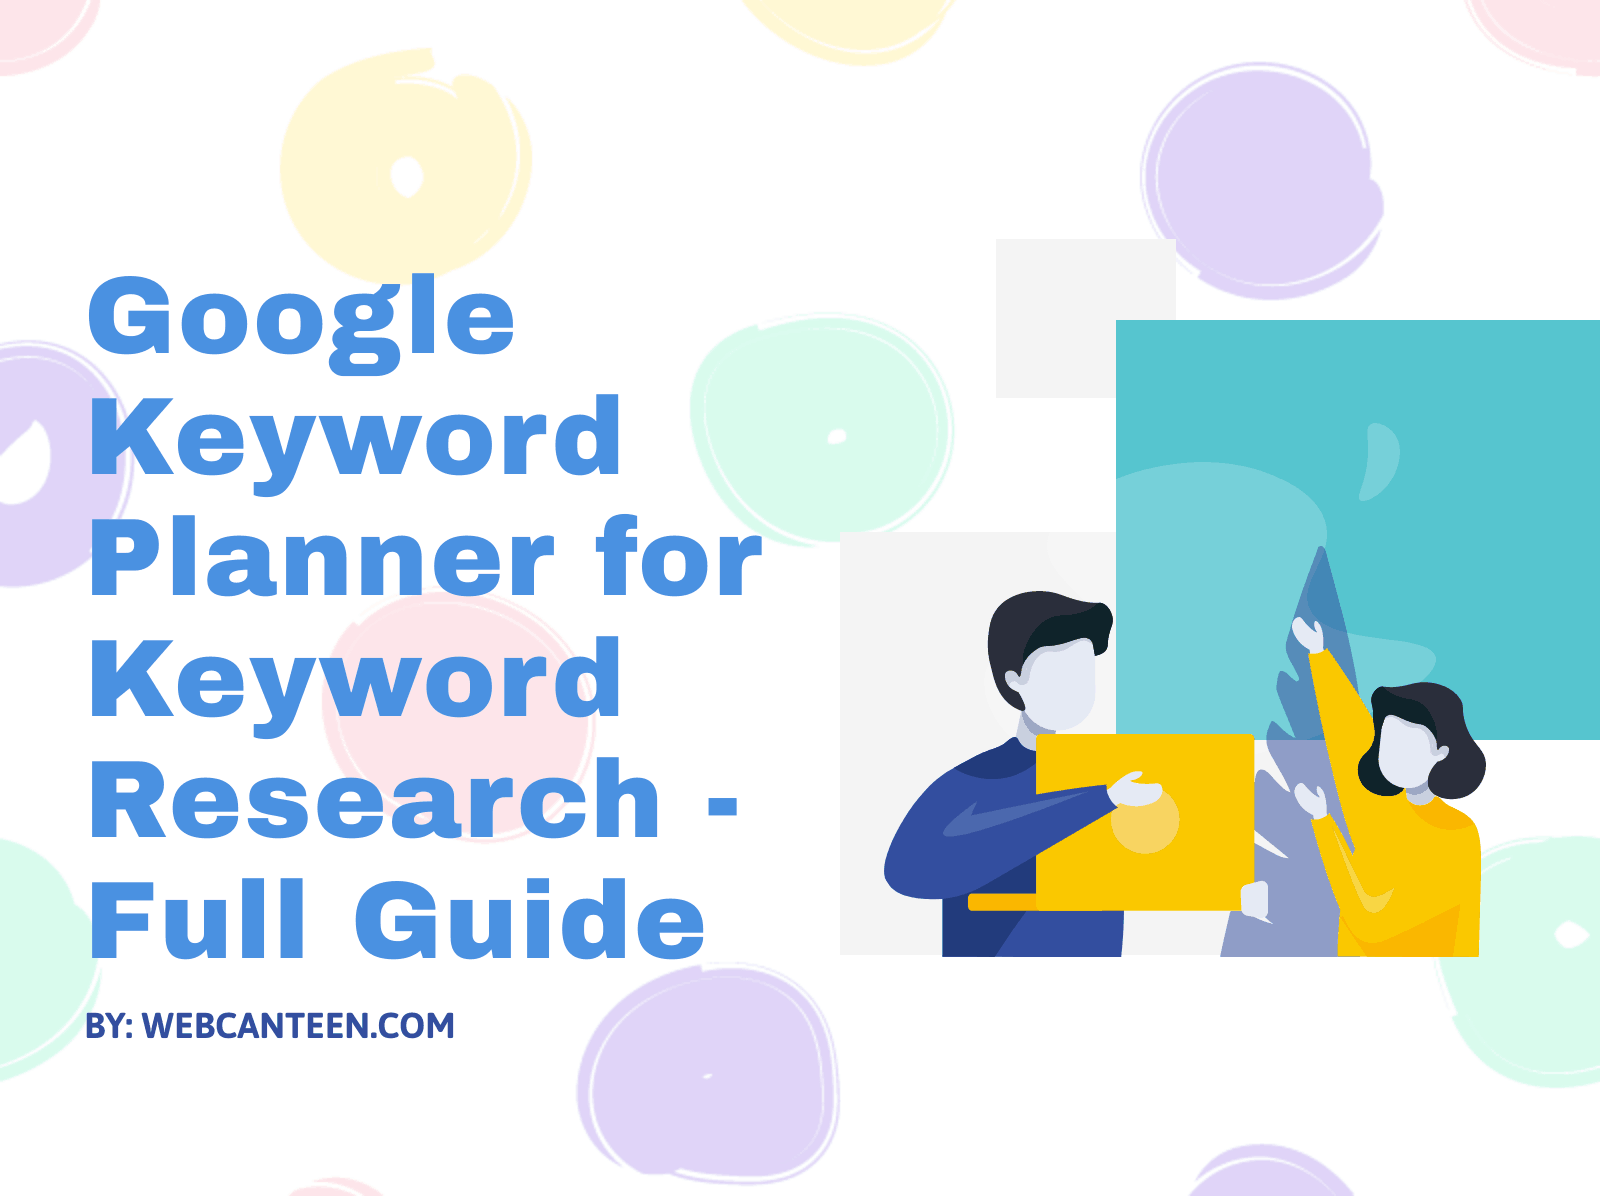 Google keyword planner for Keyword Research - SEO Full Guide